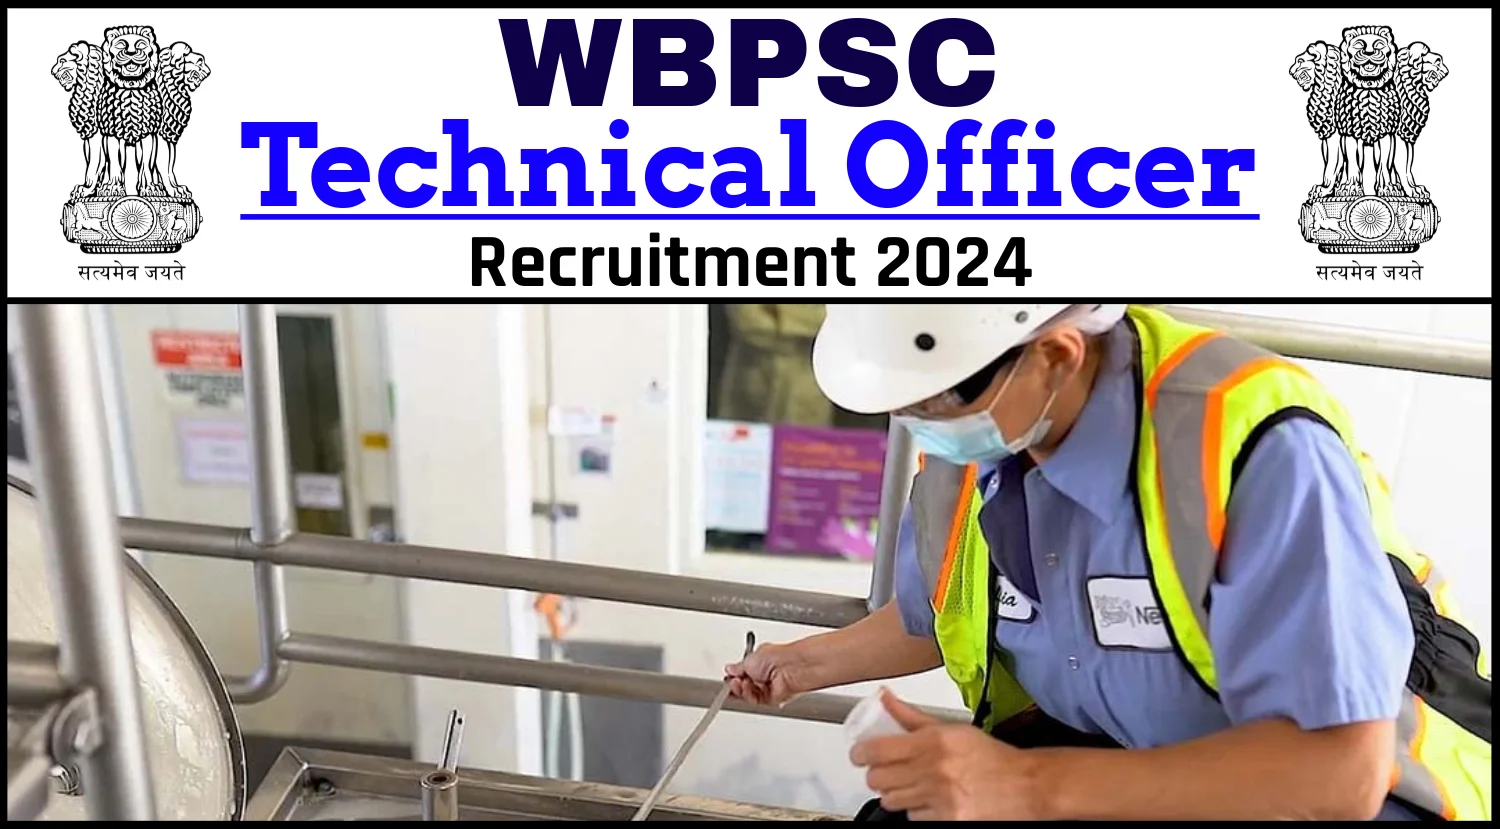 WBPSC Technical Officer Recruitment 2024 